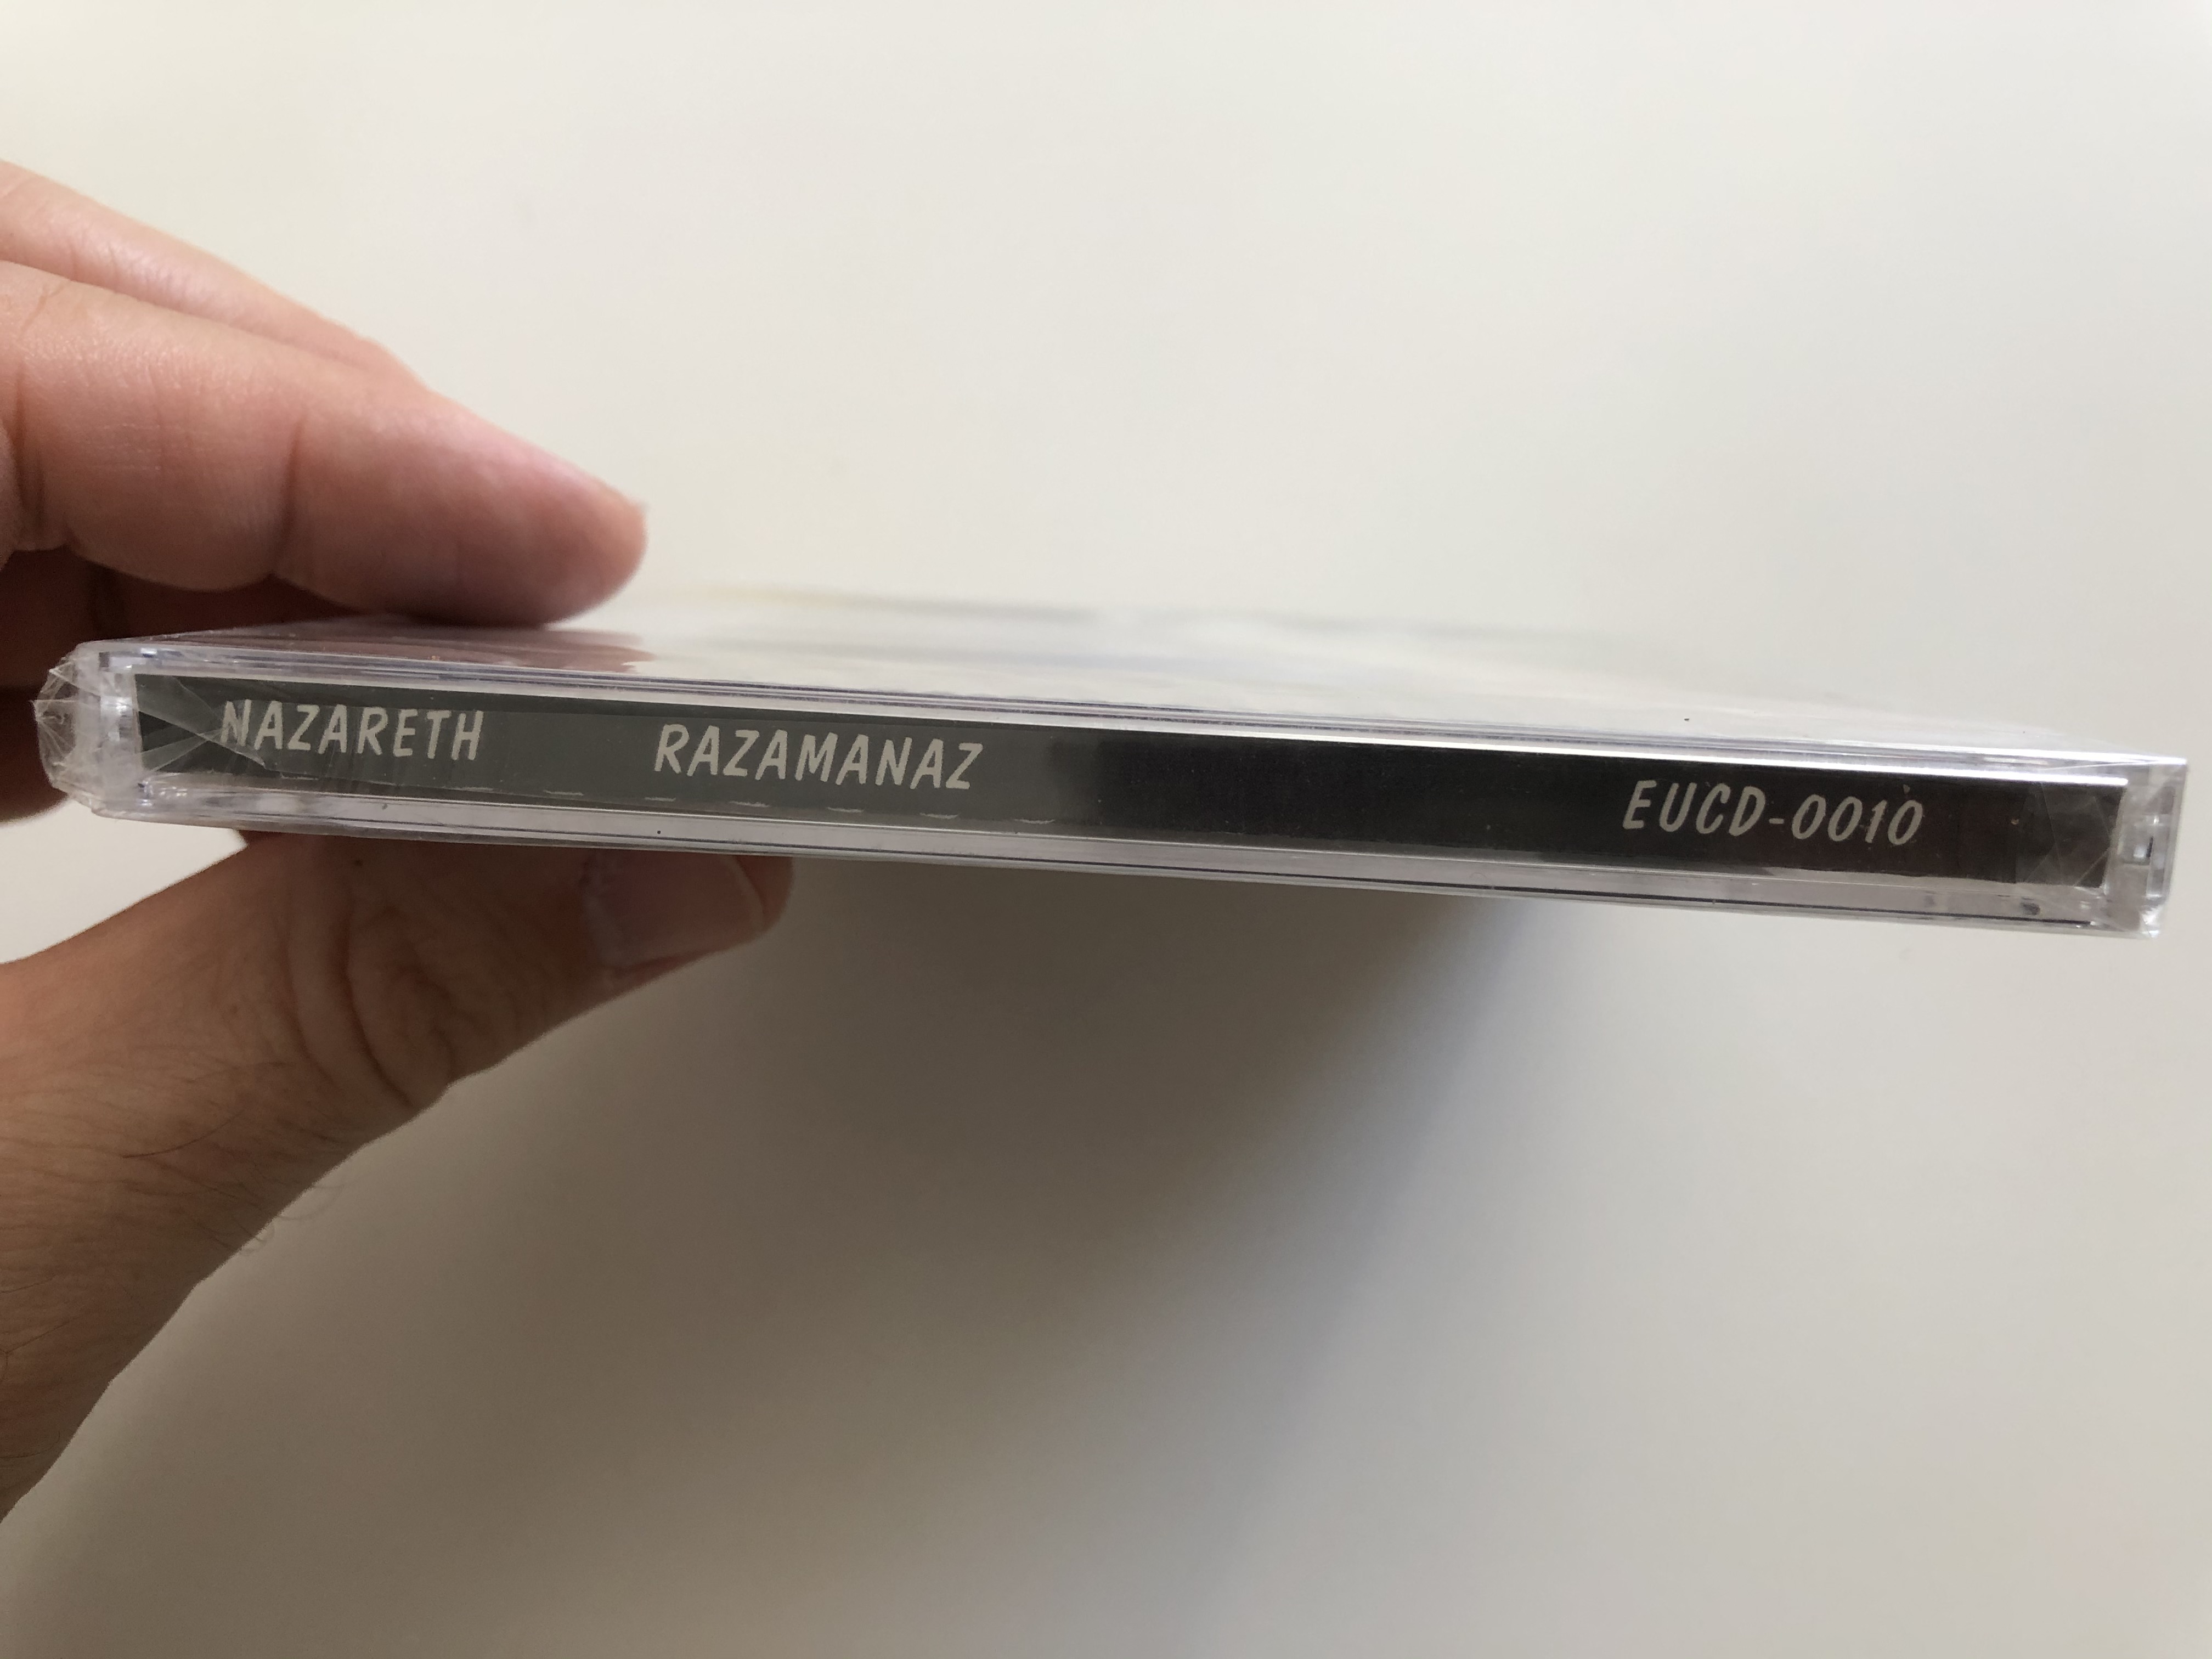 nazareth-razamanaz-pop-classic-euroton-audio-cd-eucd-0010-3-.jpg